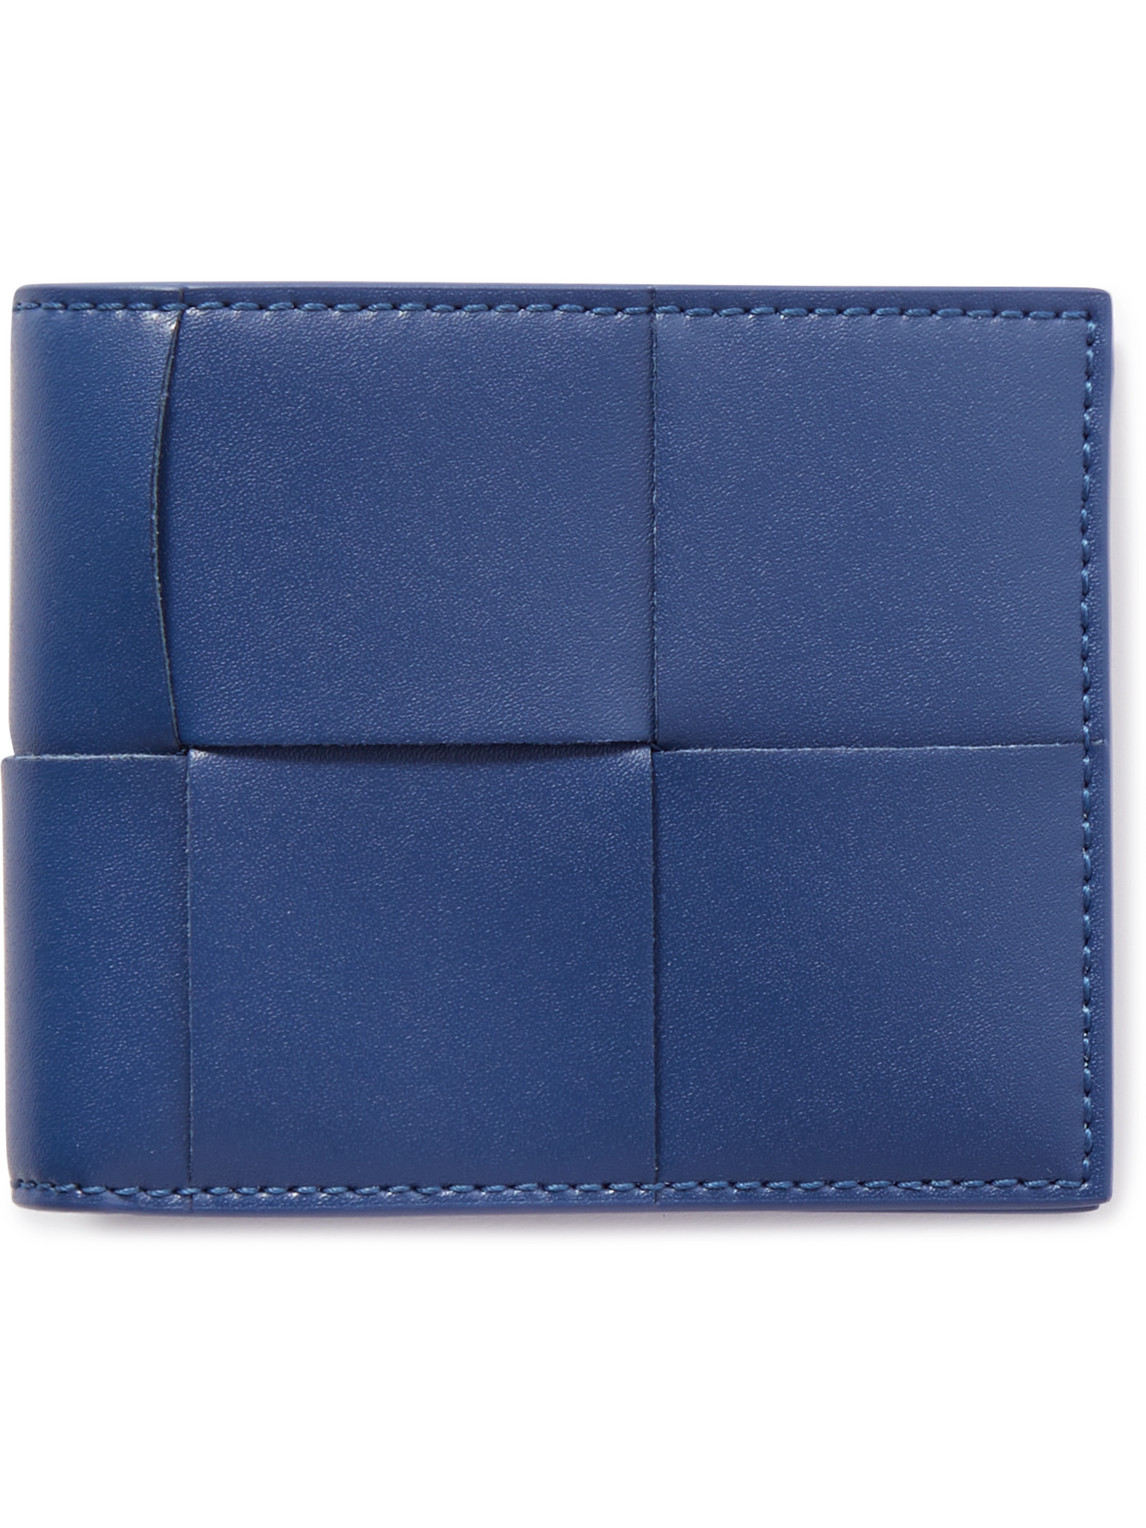 Bottega Veneta - Intrecciato Leather Billfold Wallet - Men - Blue von Bottega Veneta